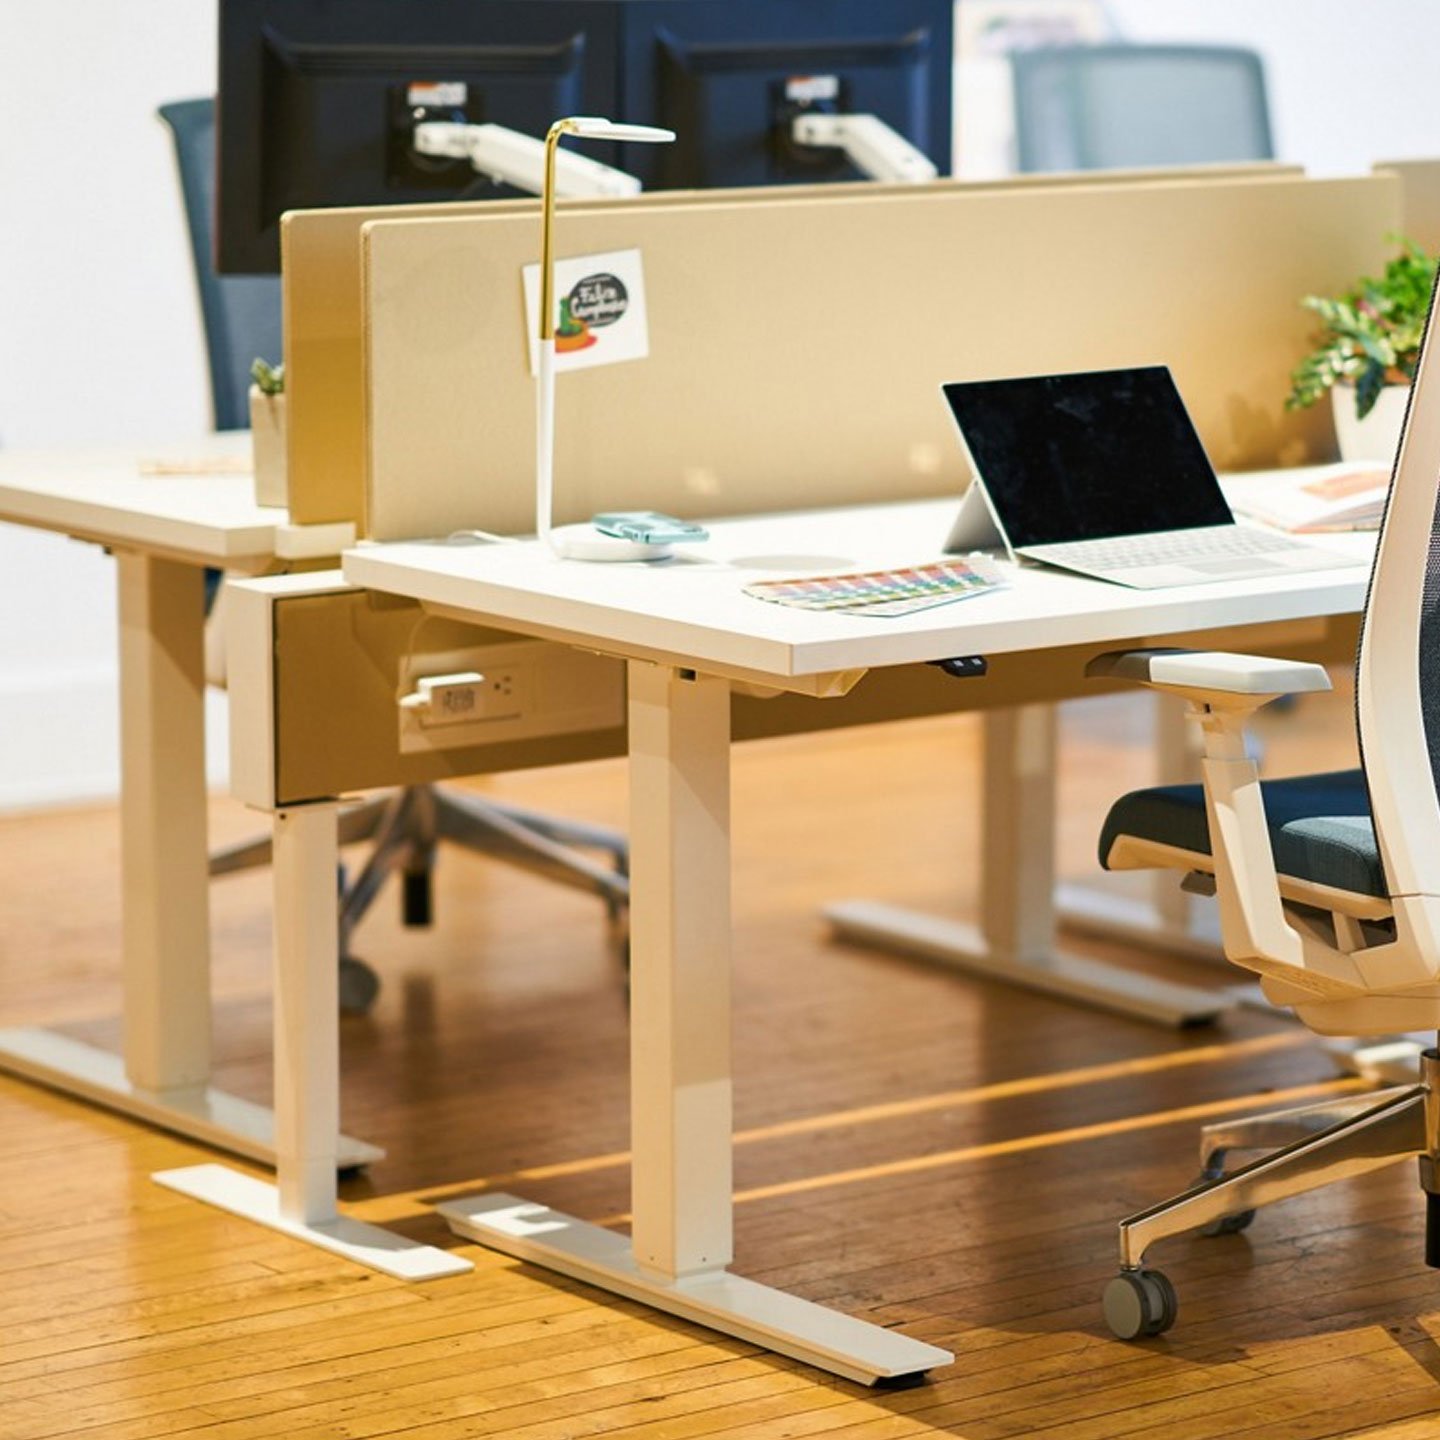 Haworth Belong Plus Sceen on height adjustable table in open office space